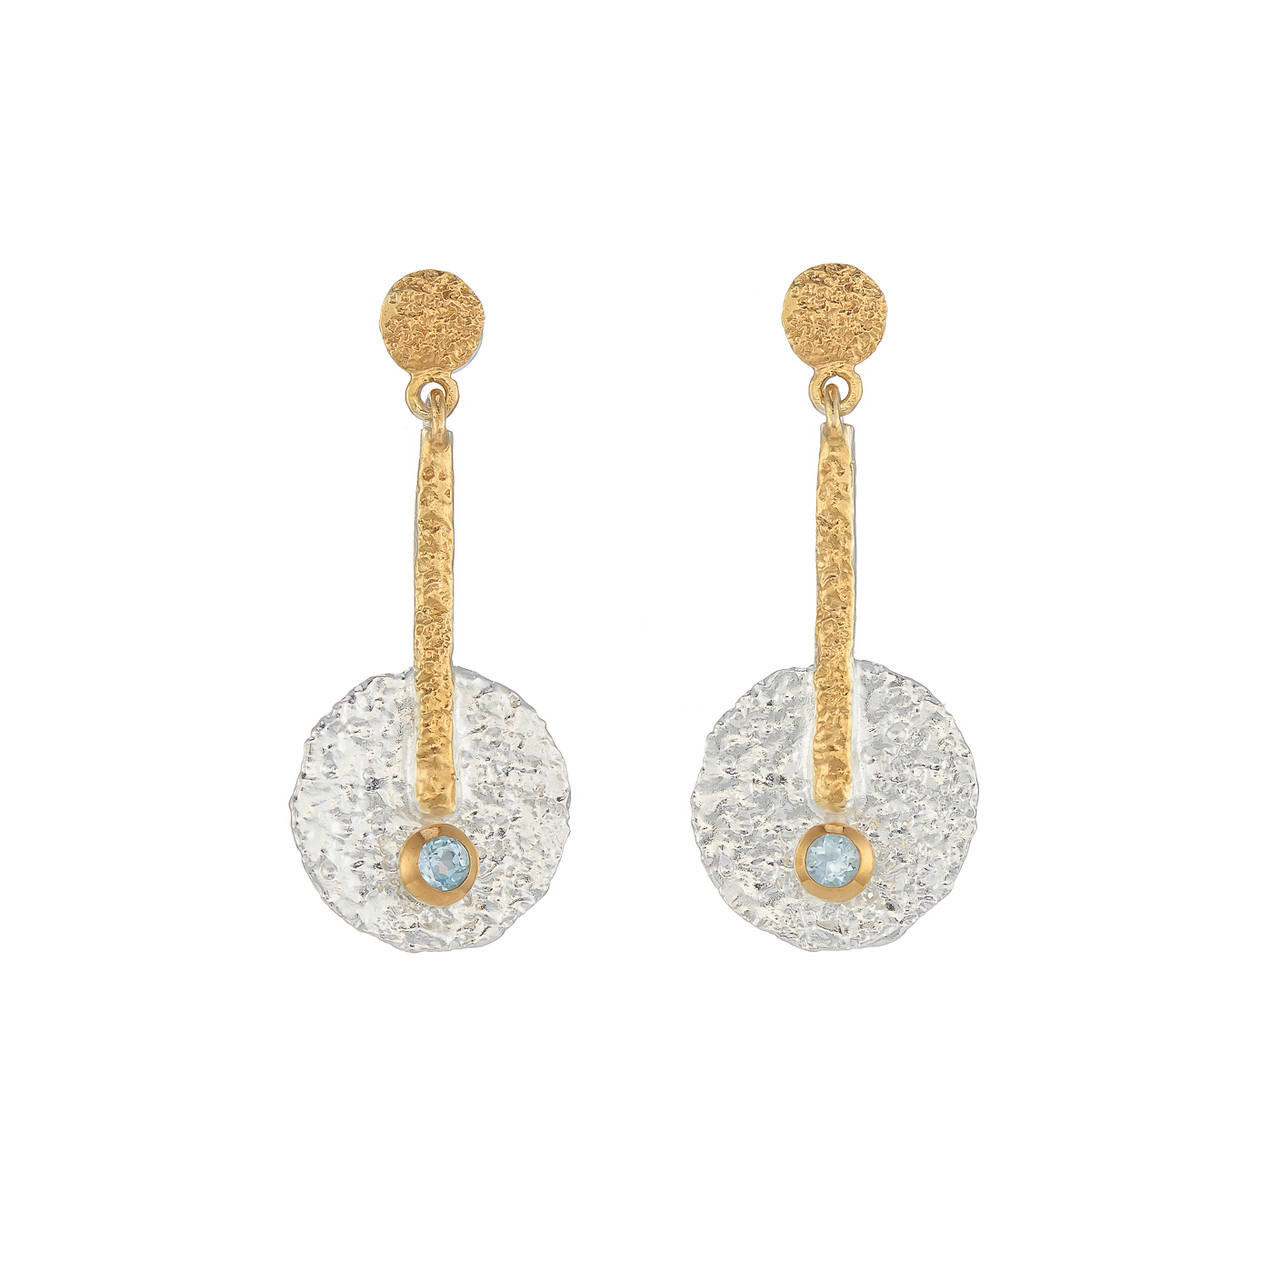 Silver & Gold Geometric Drop Earrings with Blue Topaz - Tomfoolery London